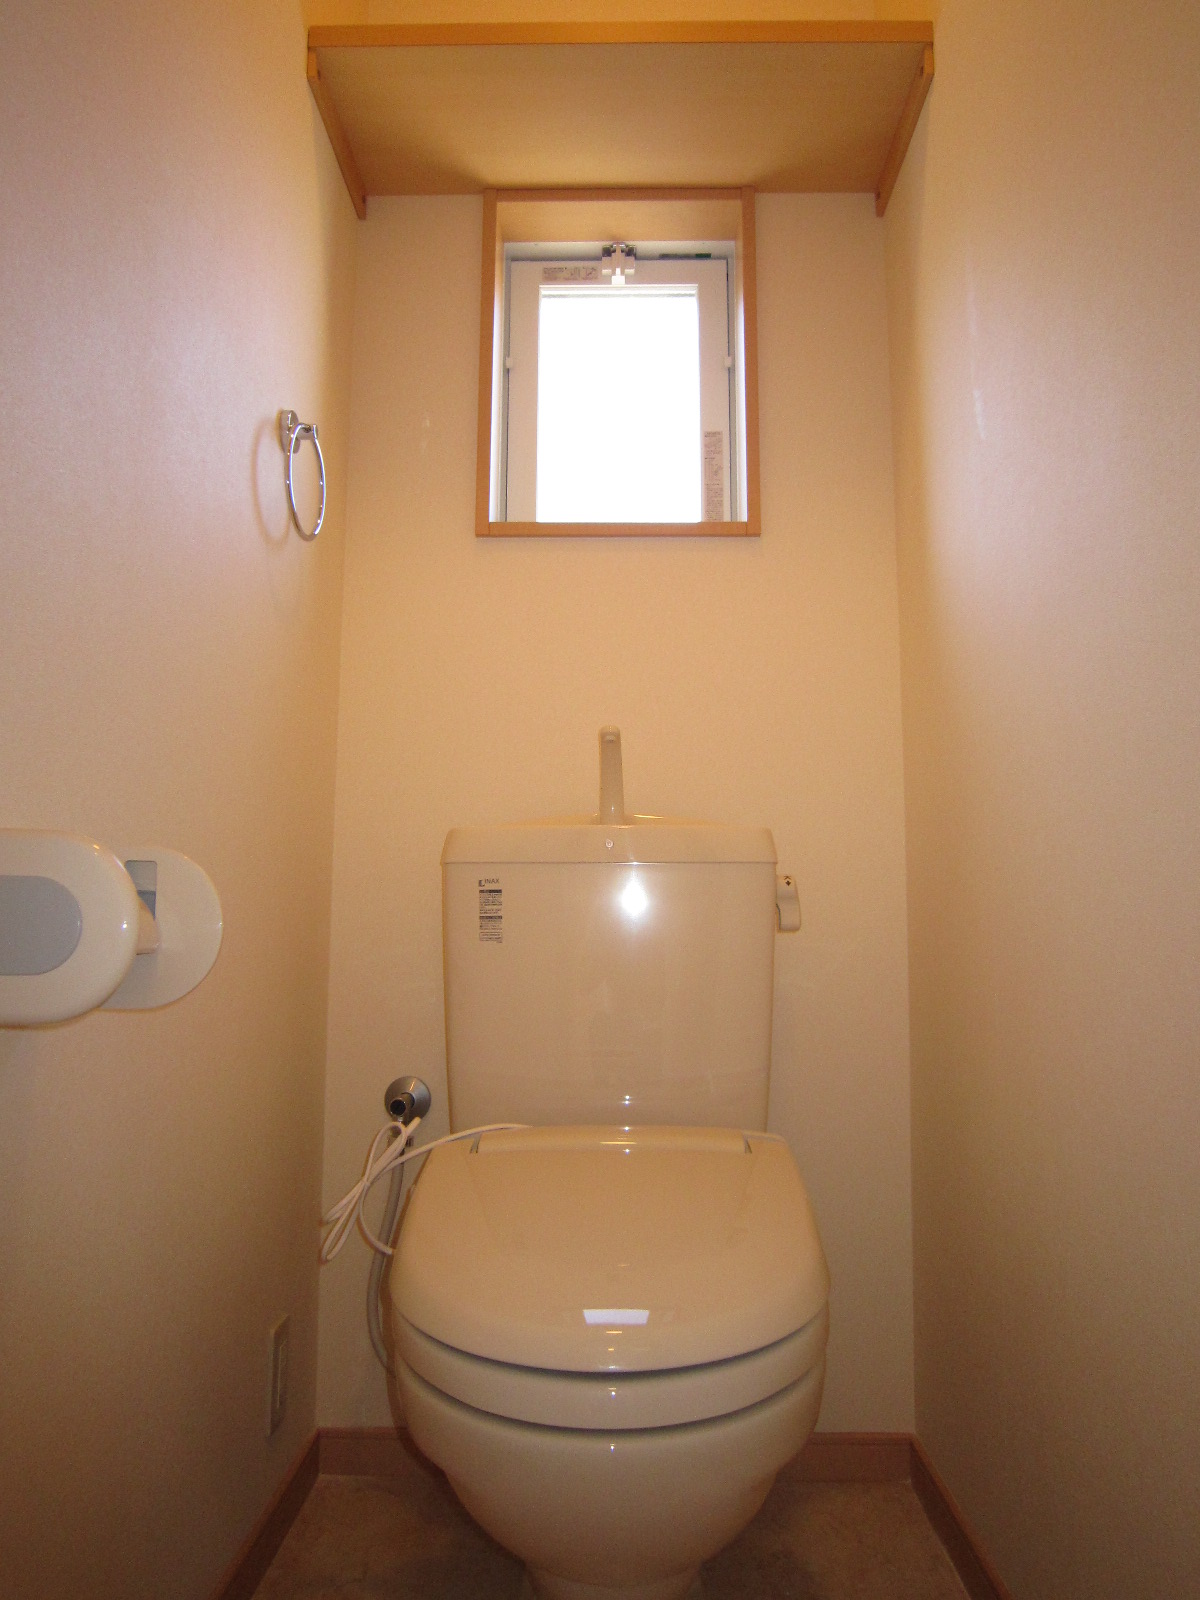 Toilet. Window with bright toilet